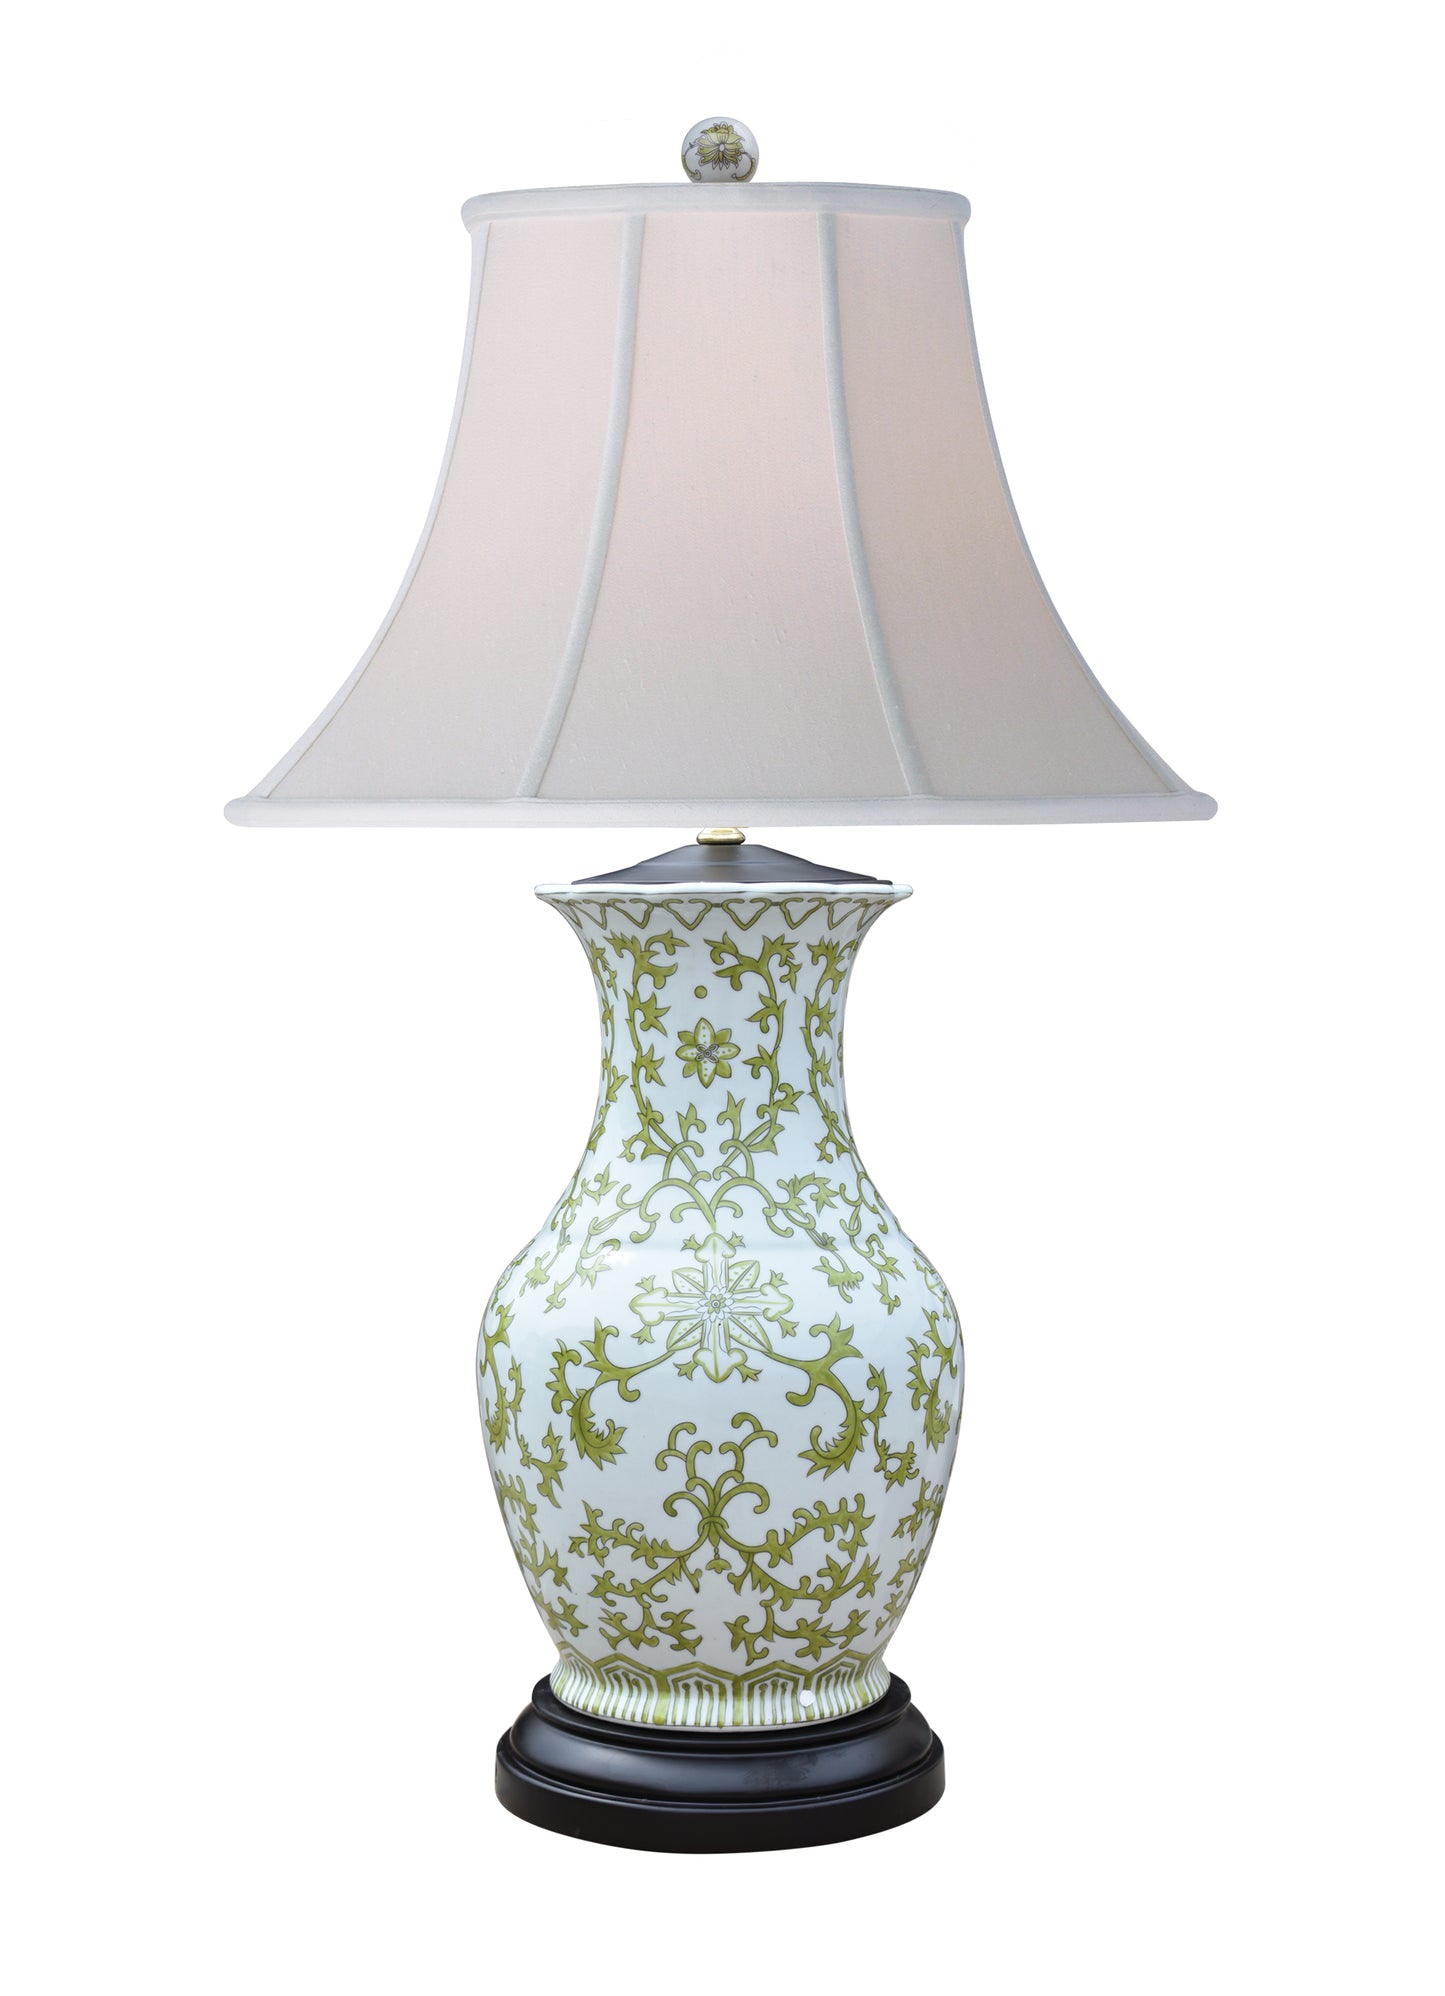 Floral Painted Porcelain Vase Table Lamp 30"